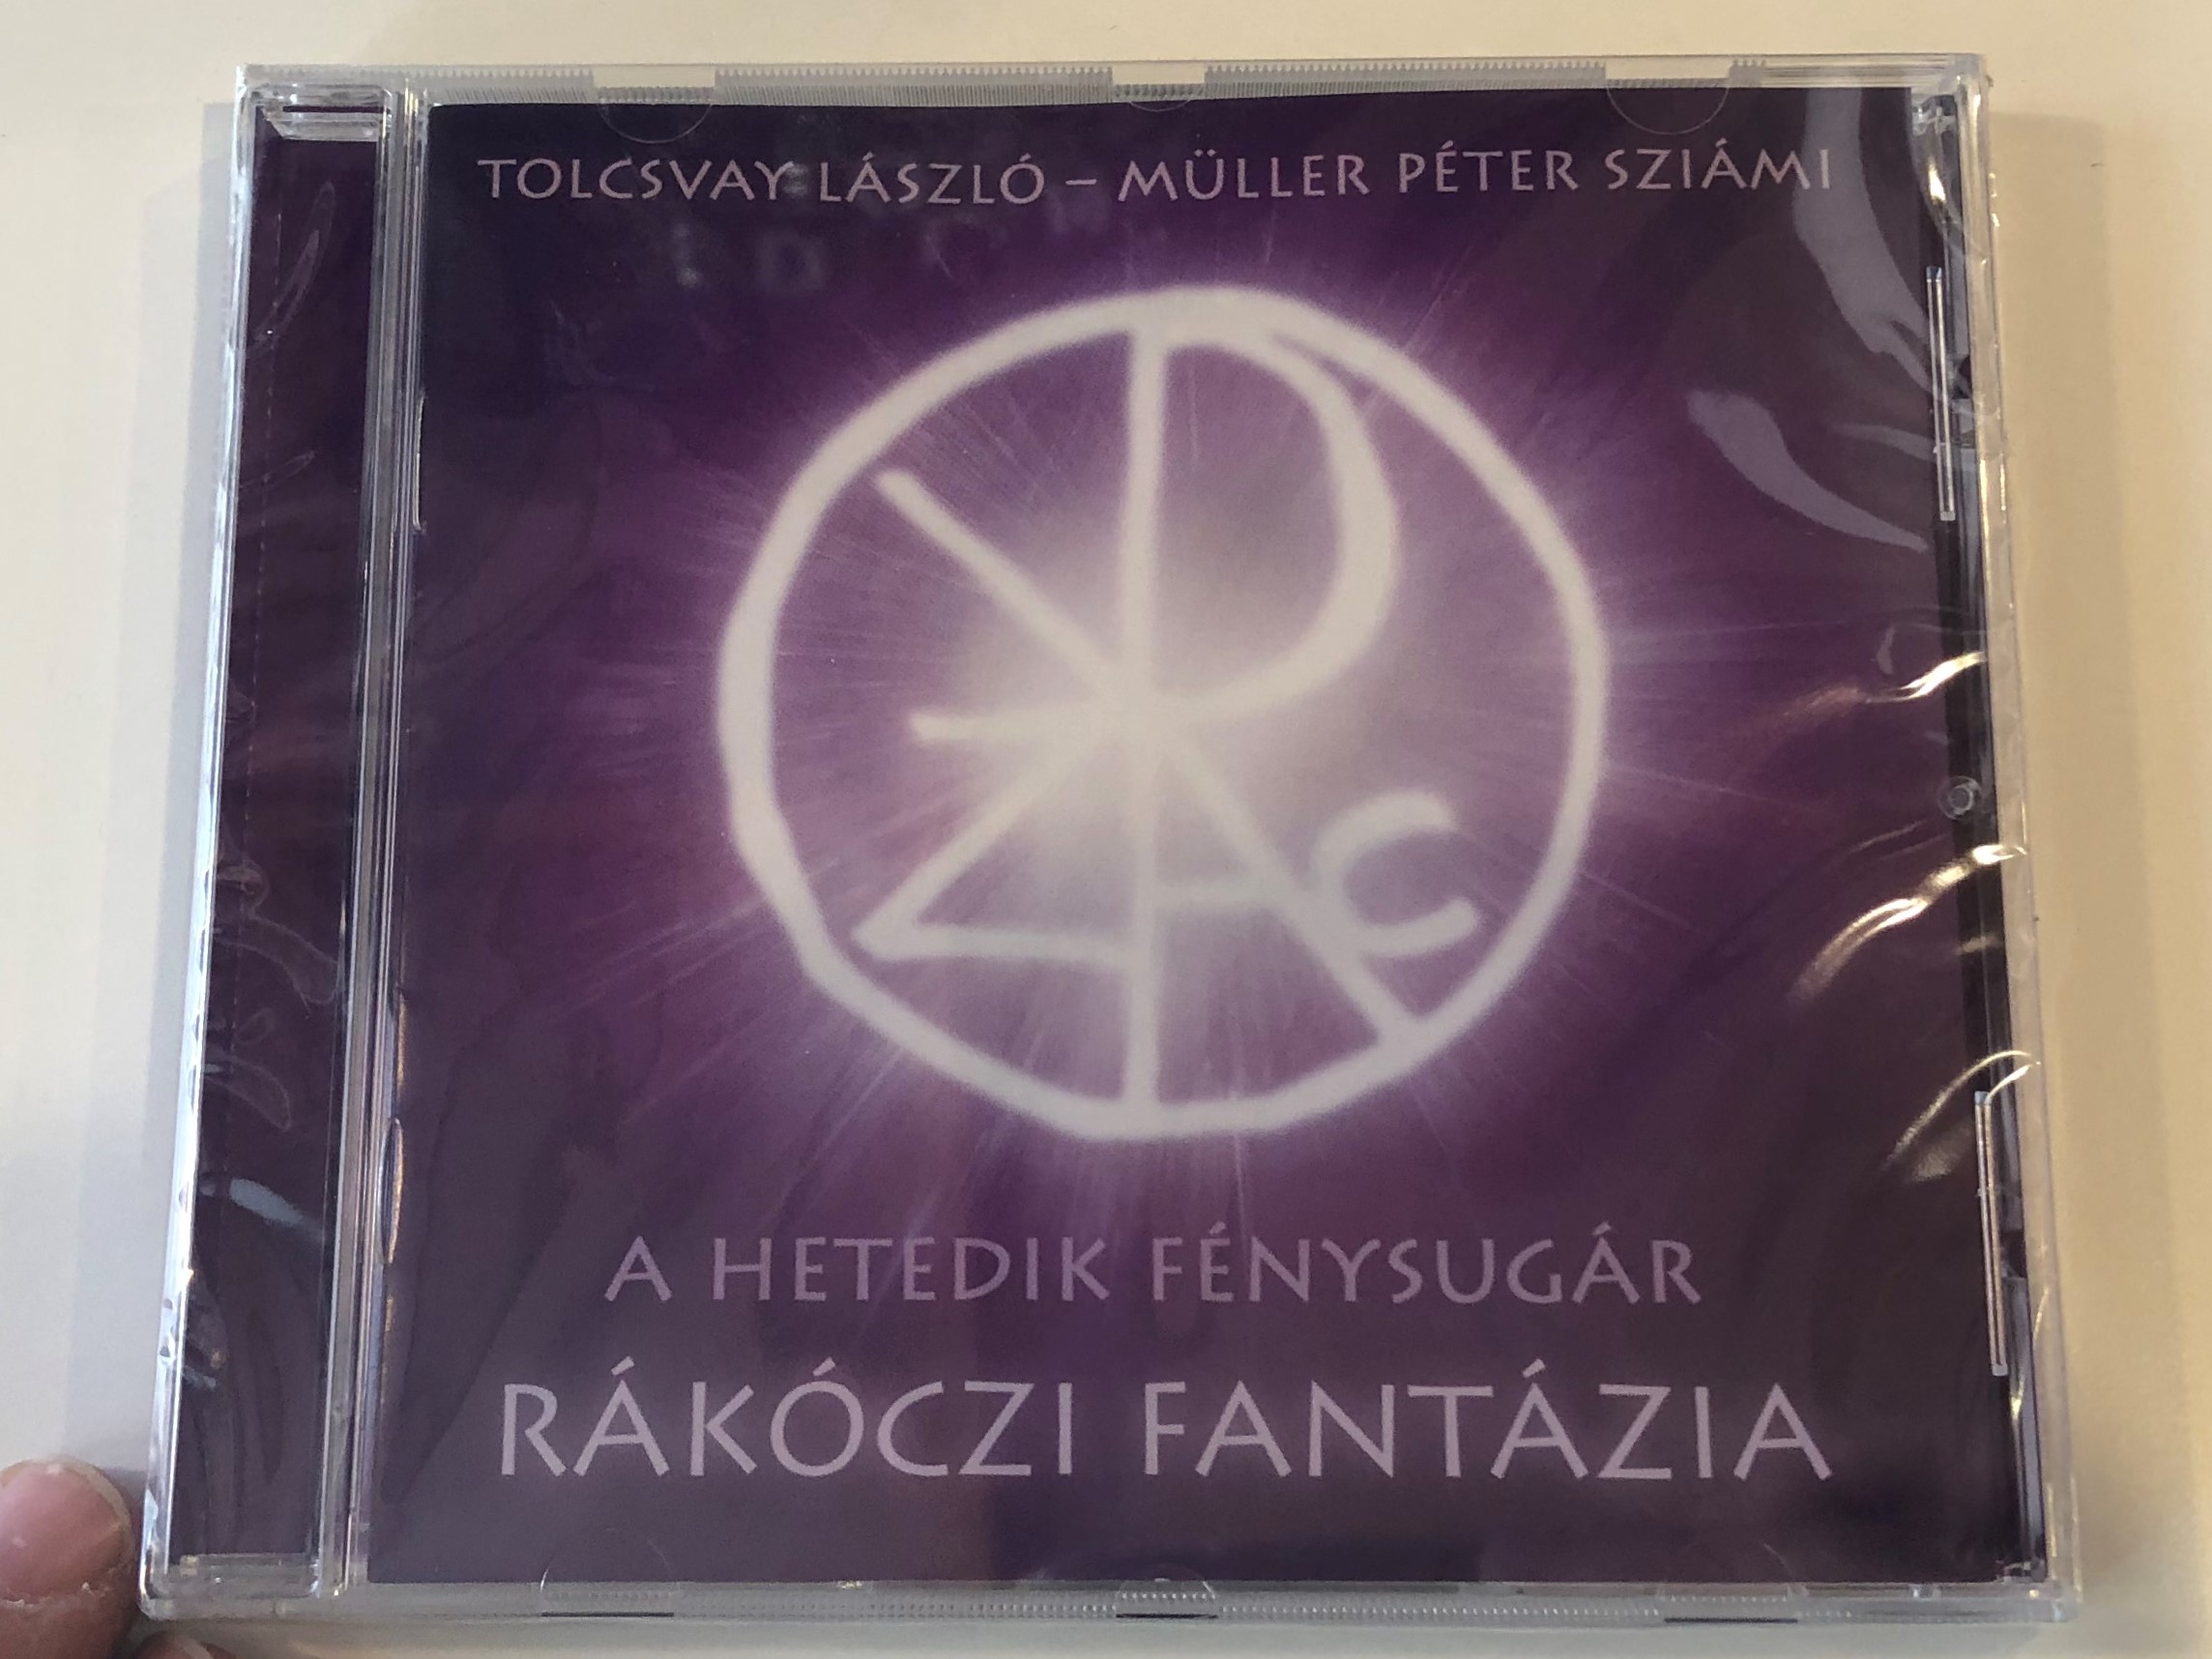 tolcsvay-laszlo-muller-peter-sziami-a-hetedik-fenysugar-rakoczi-fantazia-grundrecords-audio-cd-2017-gr094-1-.jpg